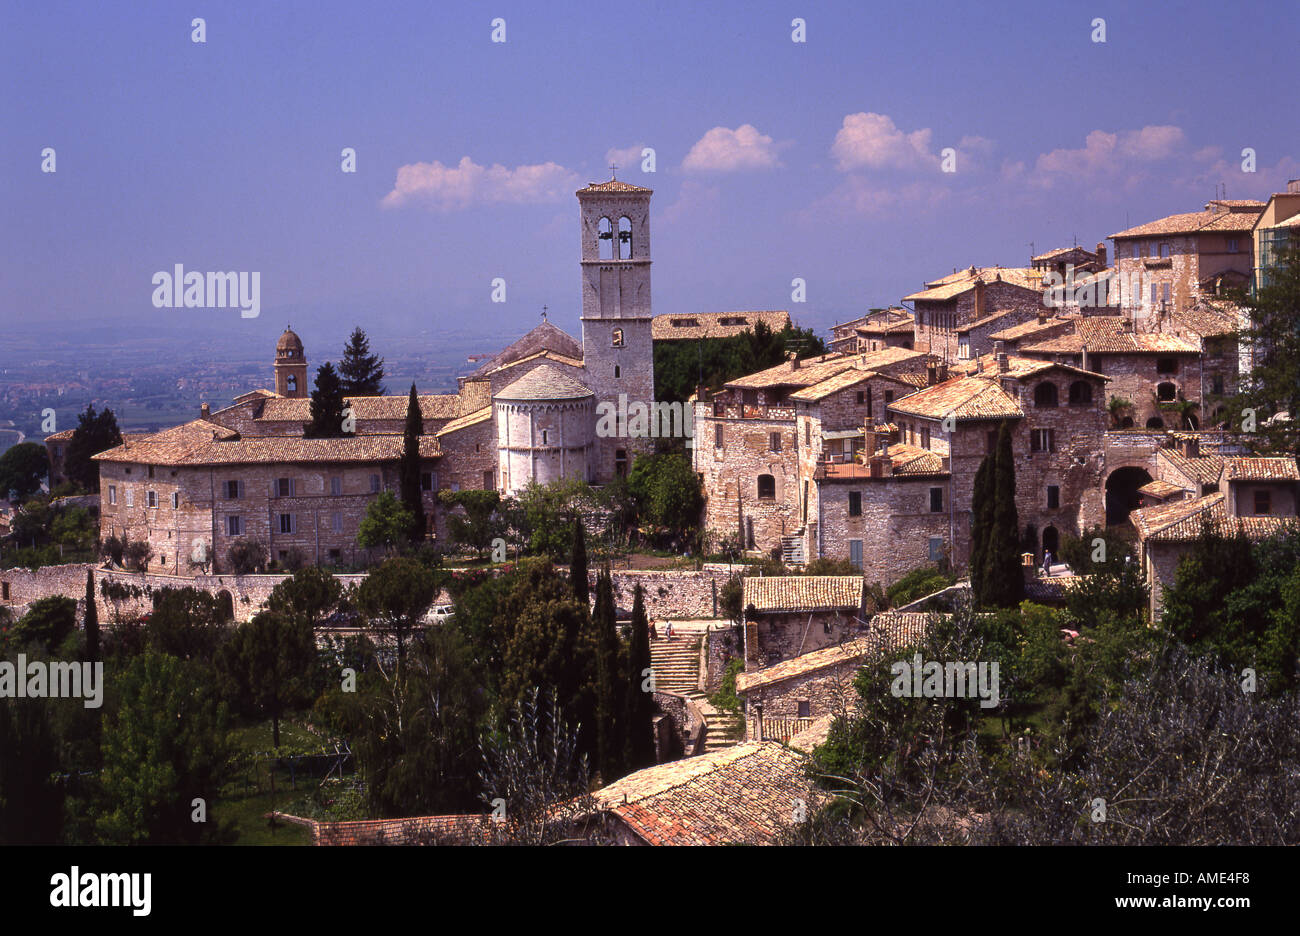 Italy Umbria Assisi skyline monuments architecture Stock Photo - Alamy